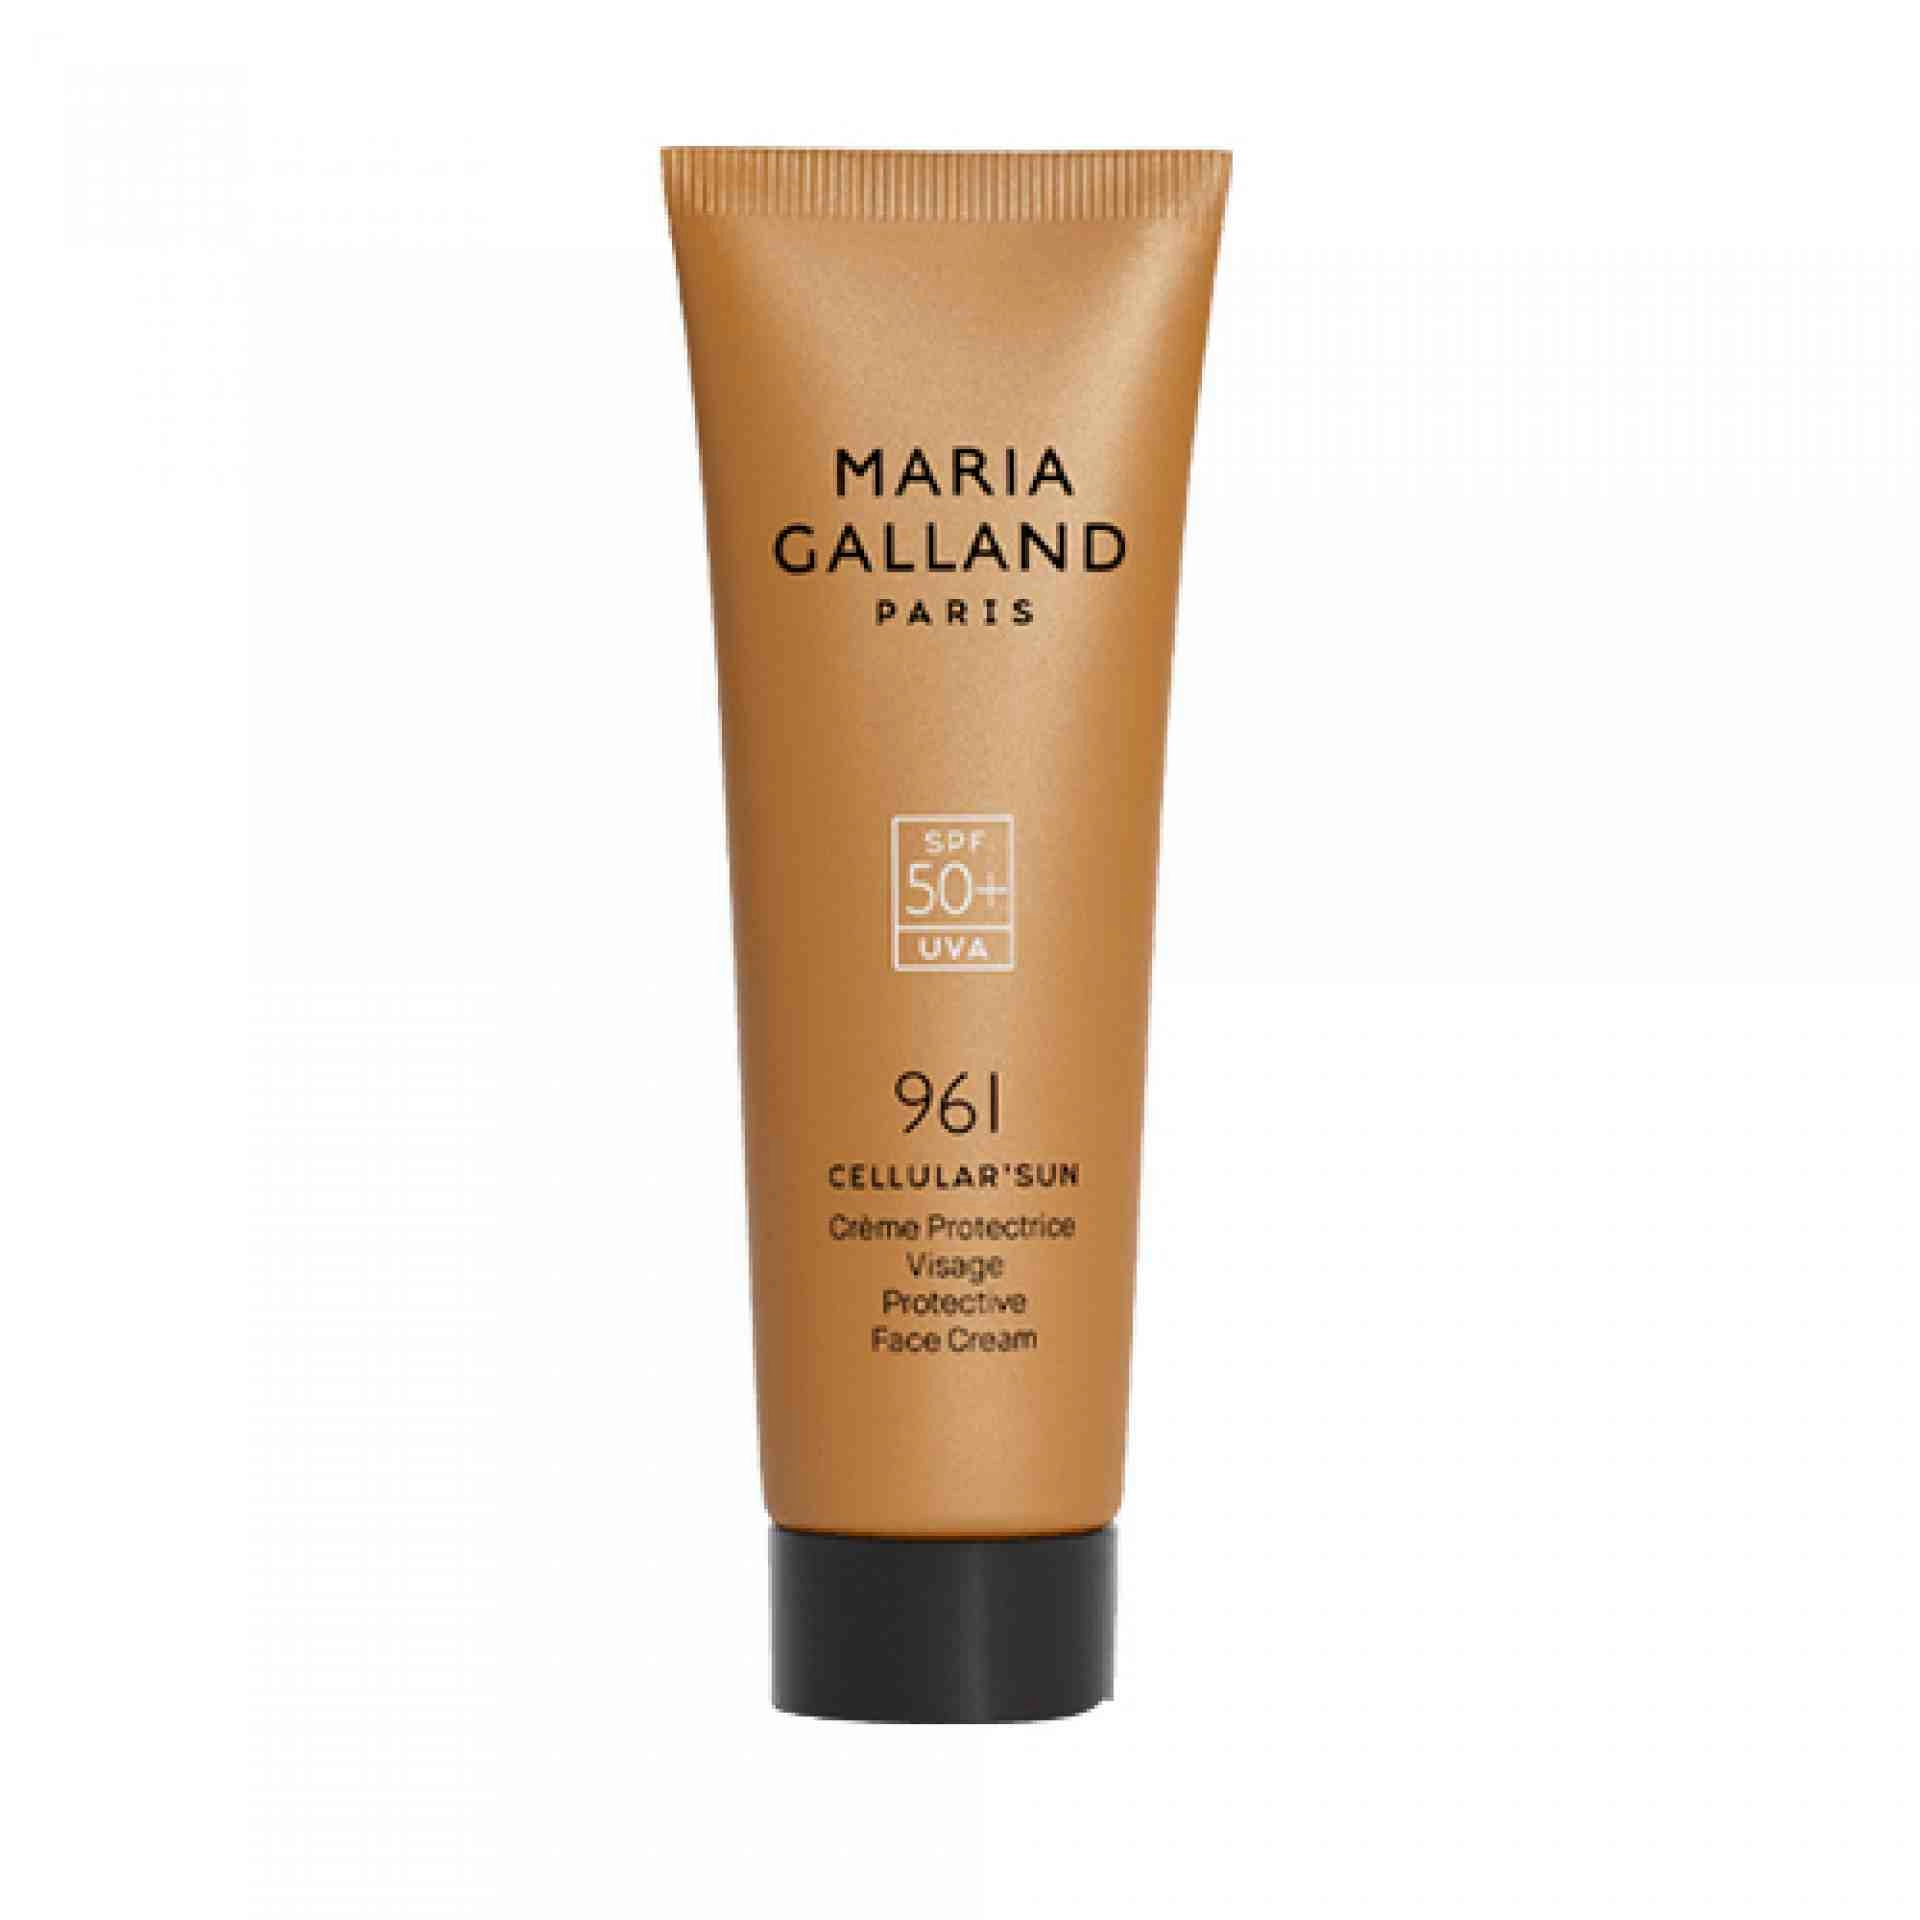 961 y 960 Creme Protective Visage | Protective Face Cream - Cellular'Sun - Maria Galland ®